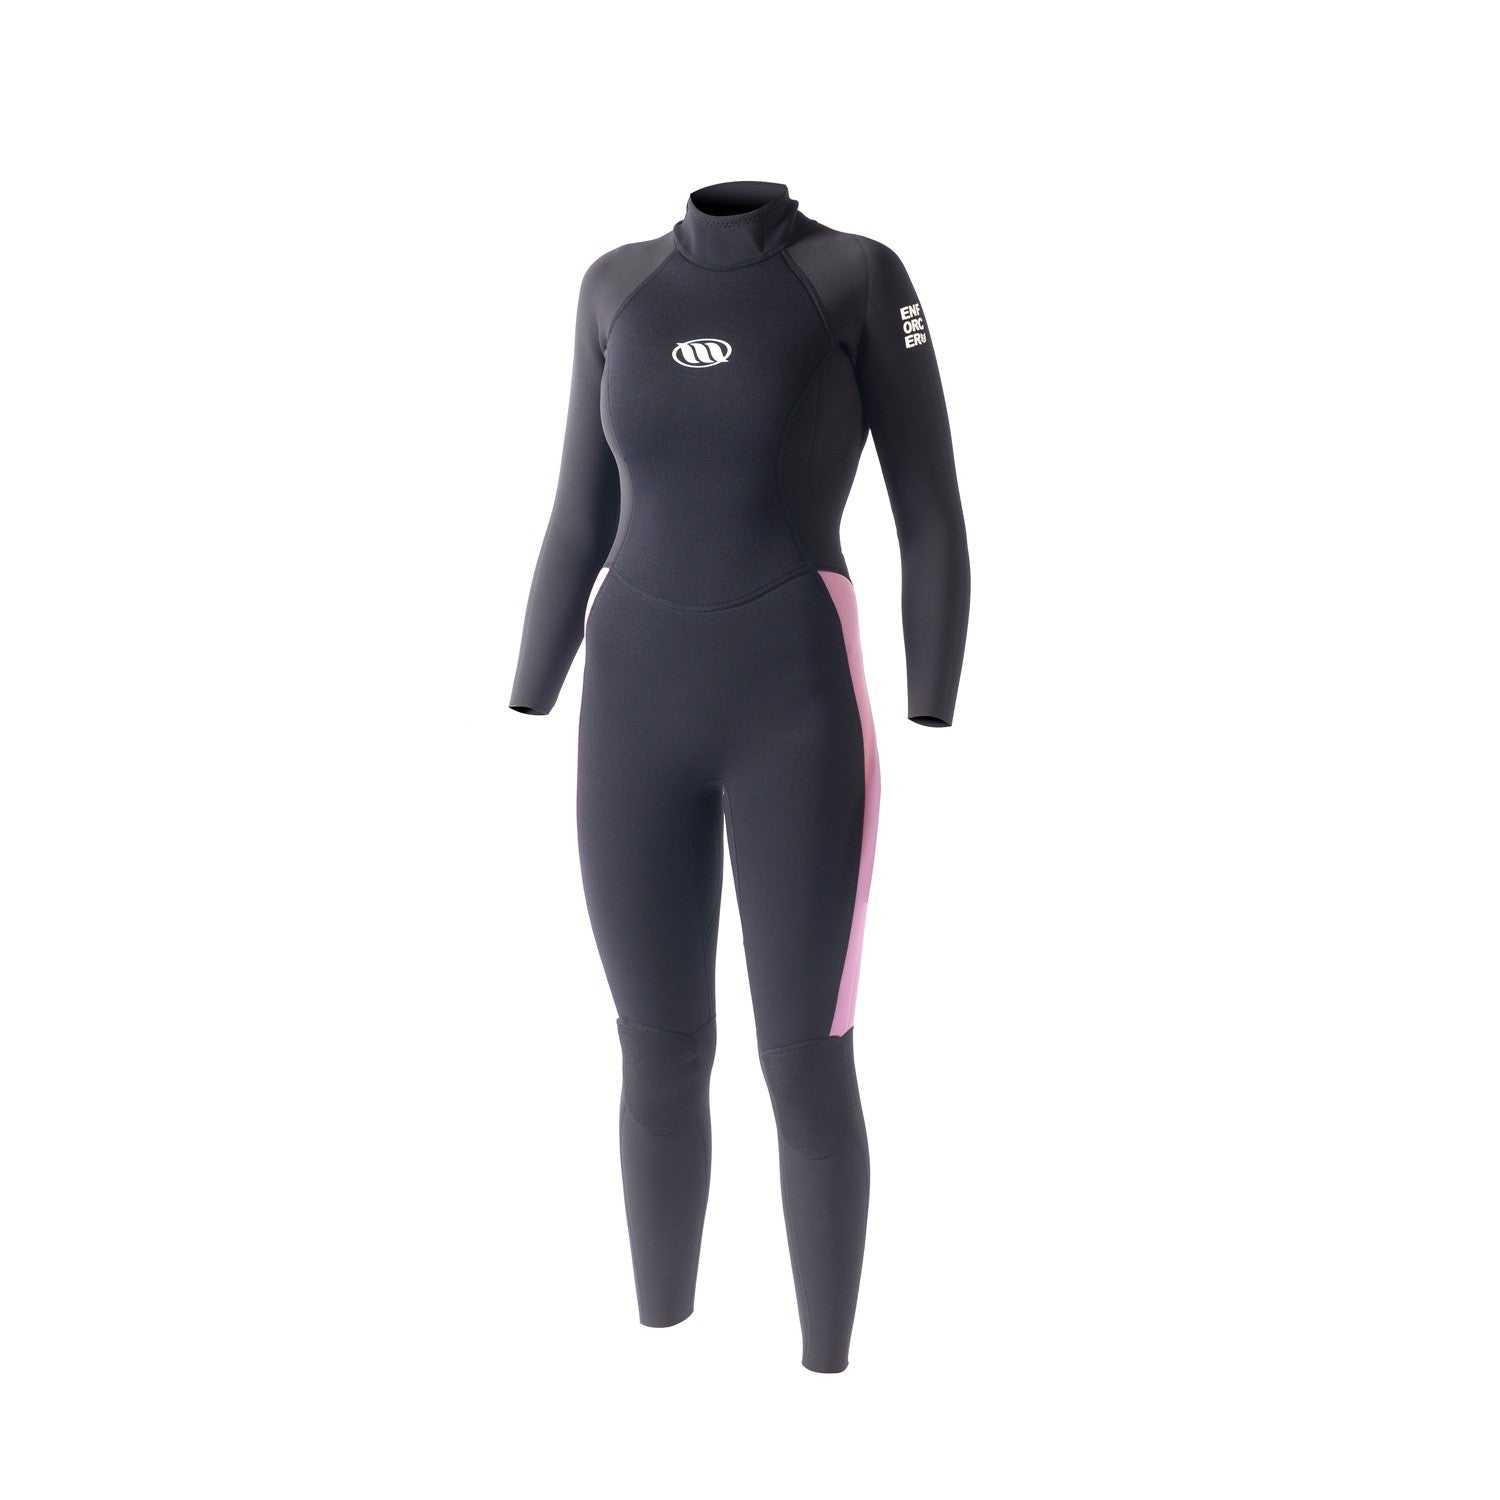 WEST - Women's surf wetsuit - Enforcer Lady 3/2mm back zip - Black / Pink